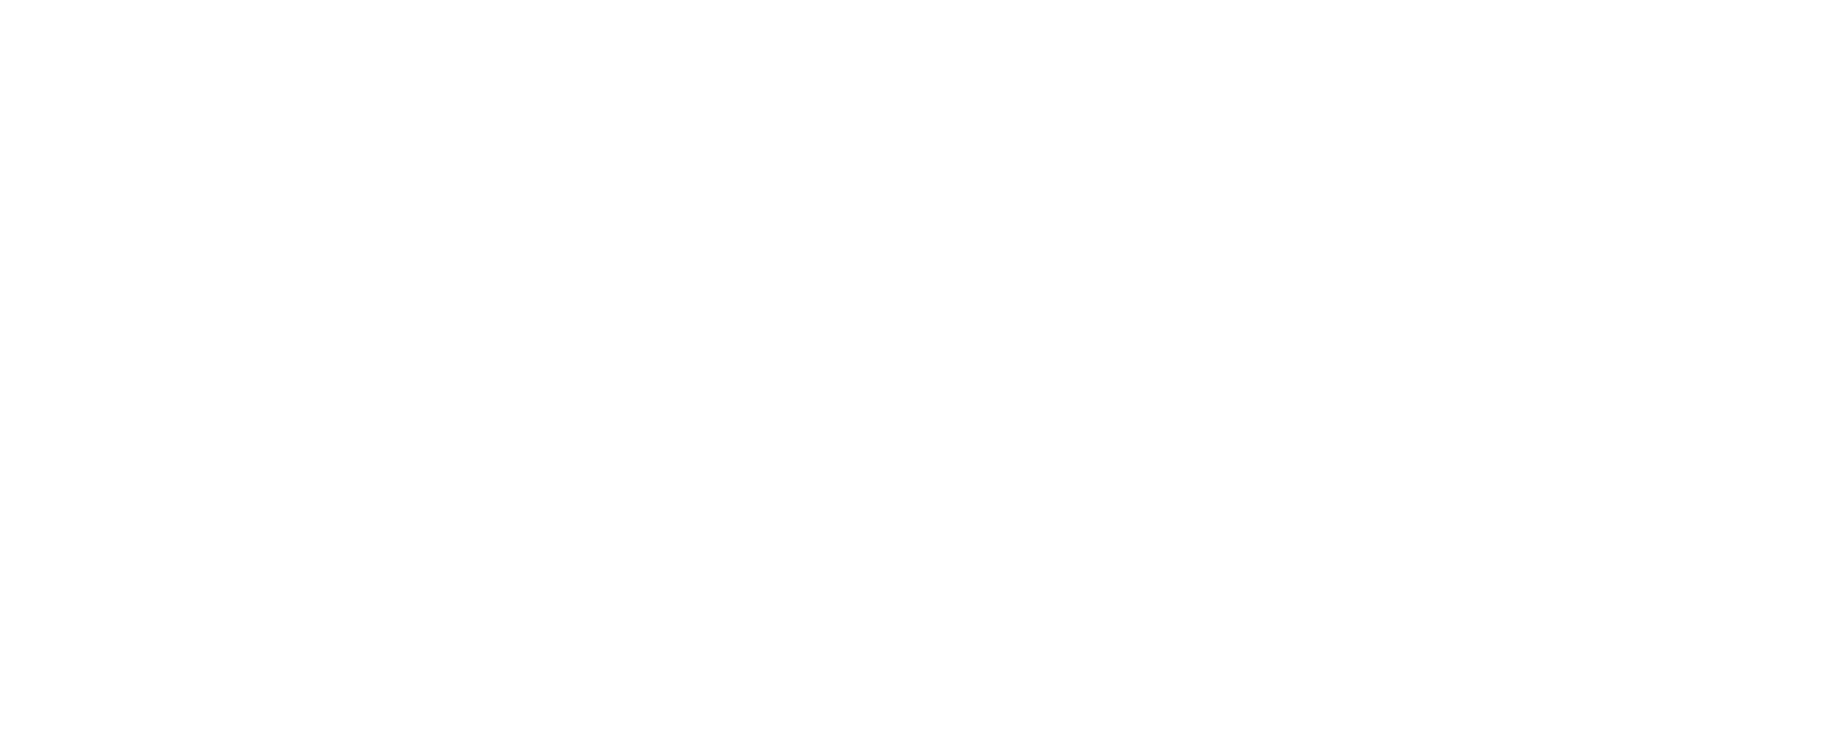 SmartTravels